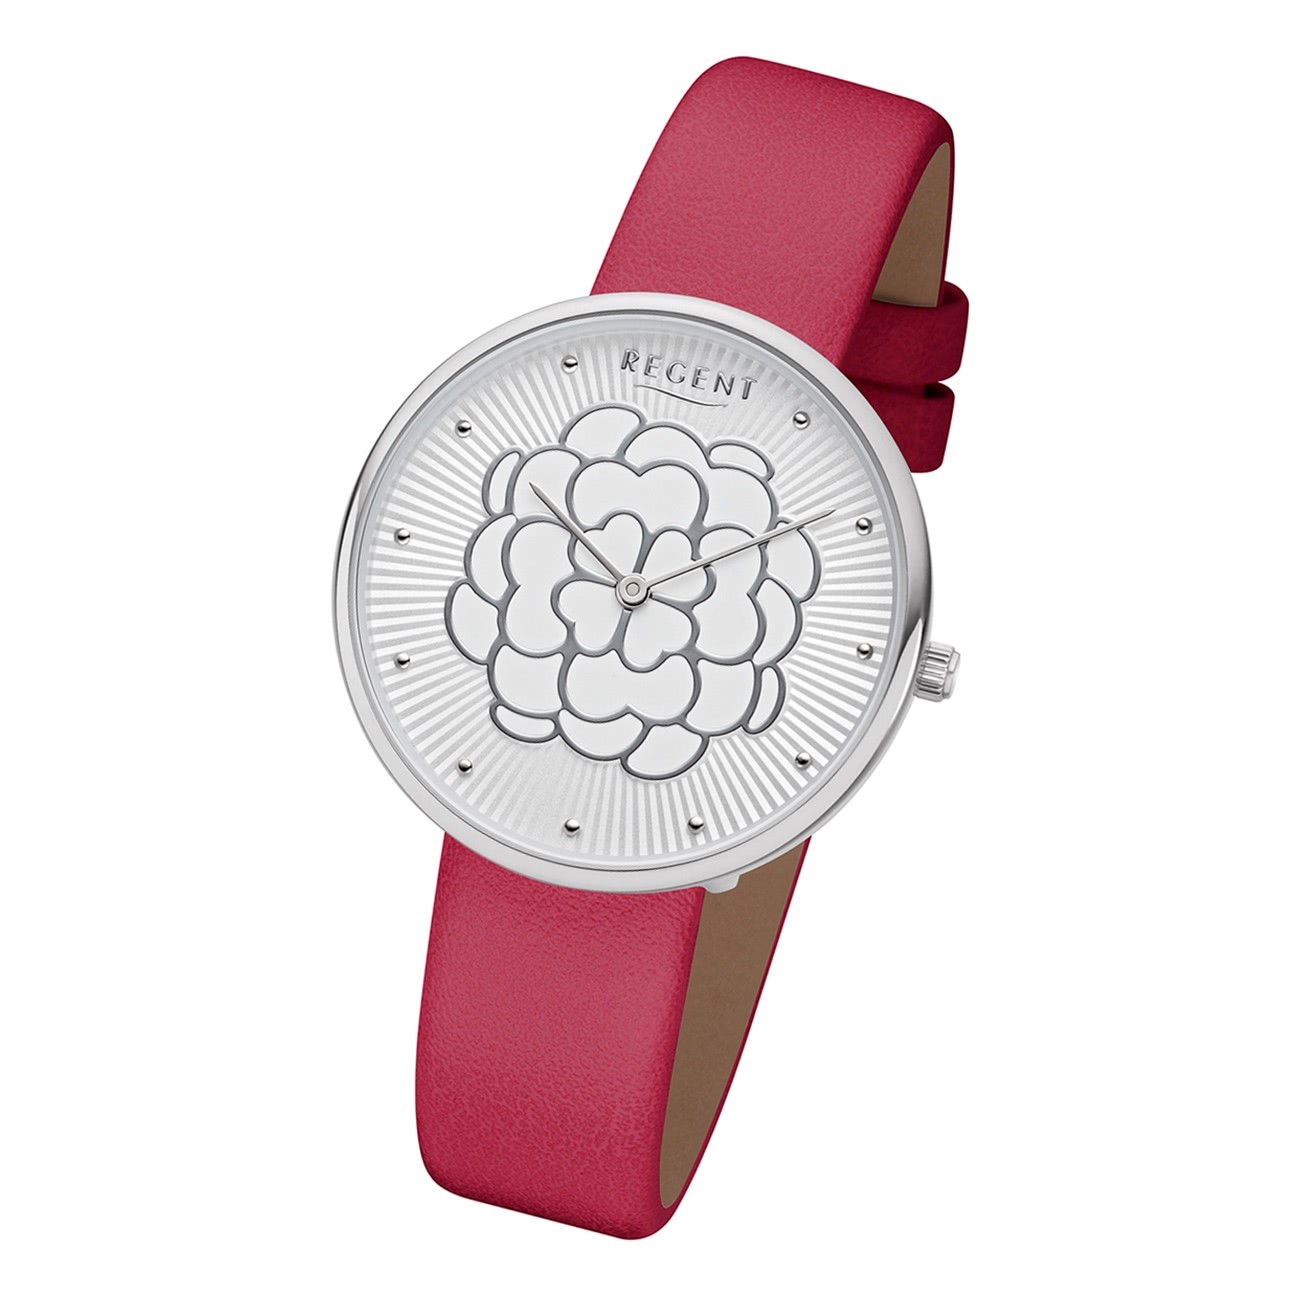 Regent Damen Armbanduhr Analog BA-602 Quarz-Uhr Leder rot URBA602